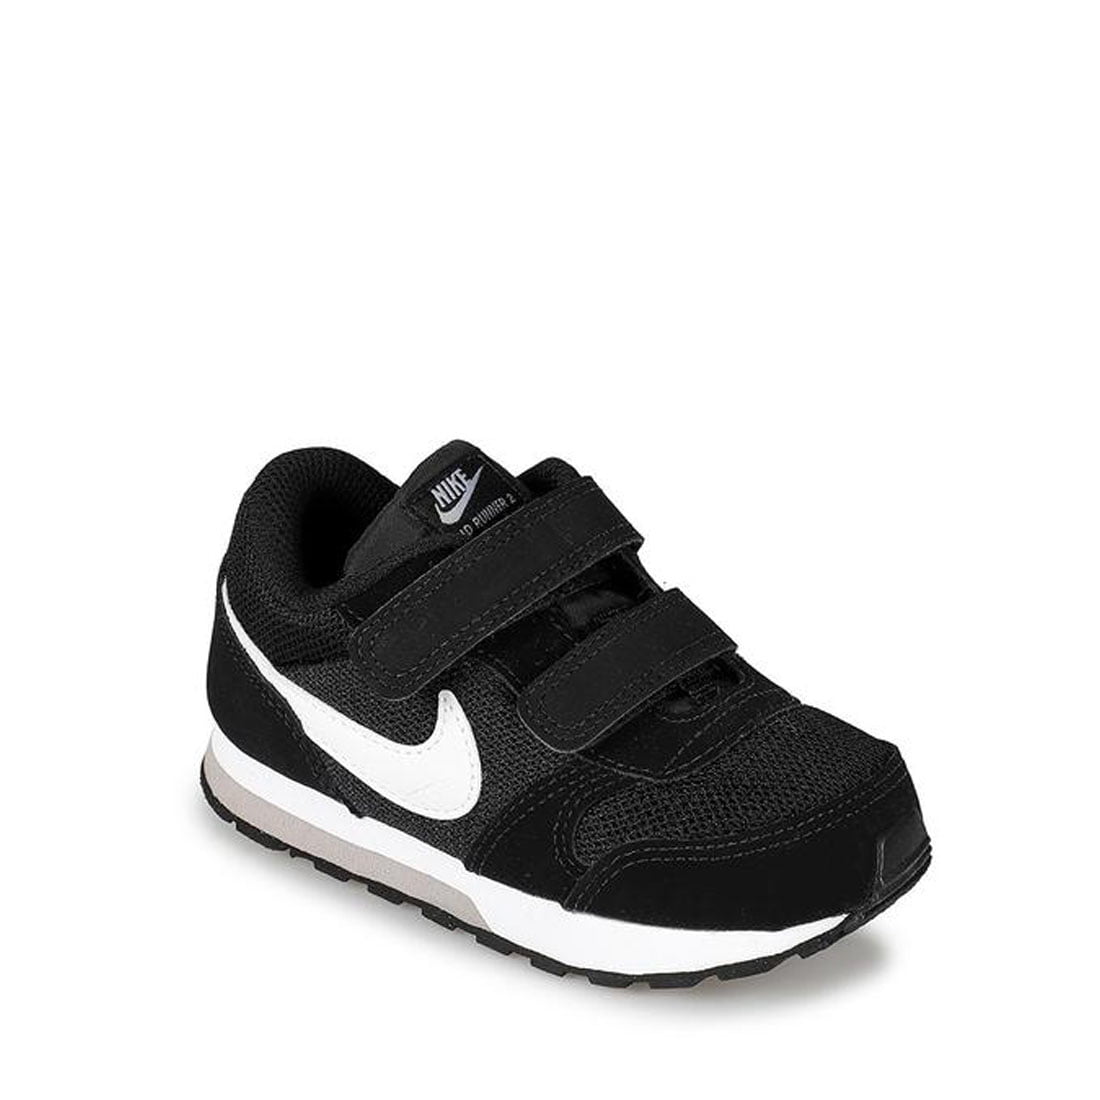 pubertad condón Escribe email Nike Md Runner 2 (TDV) Unisex/Child shoe size 9 Casual 806255-001  Black/White/Wolf Grey - Walmart.com